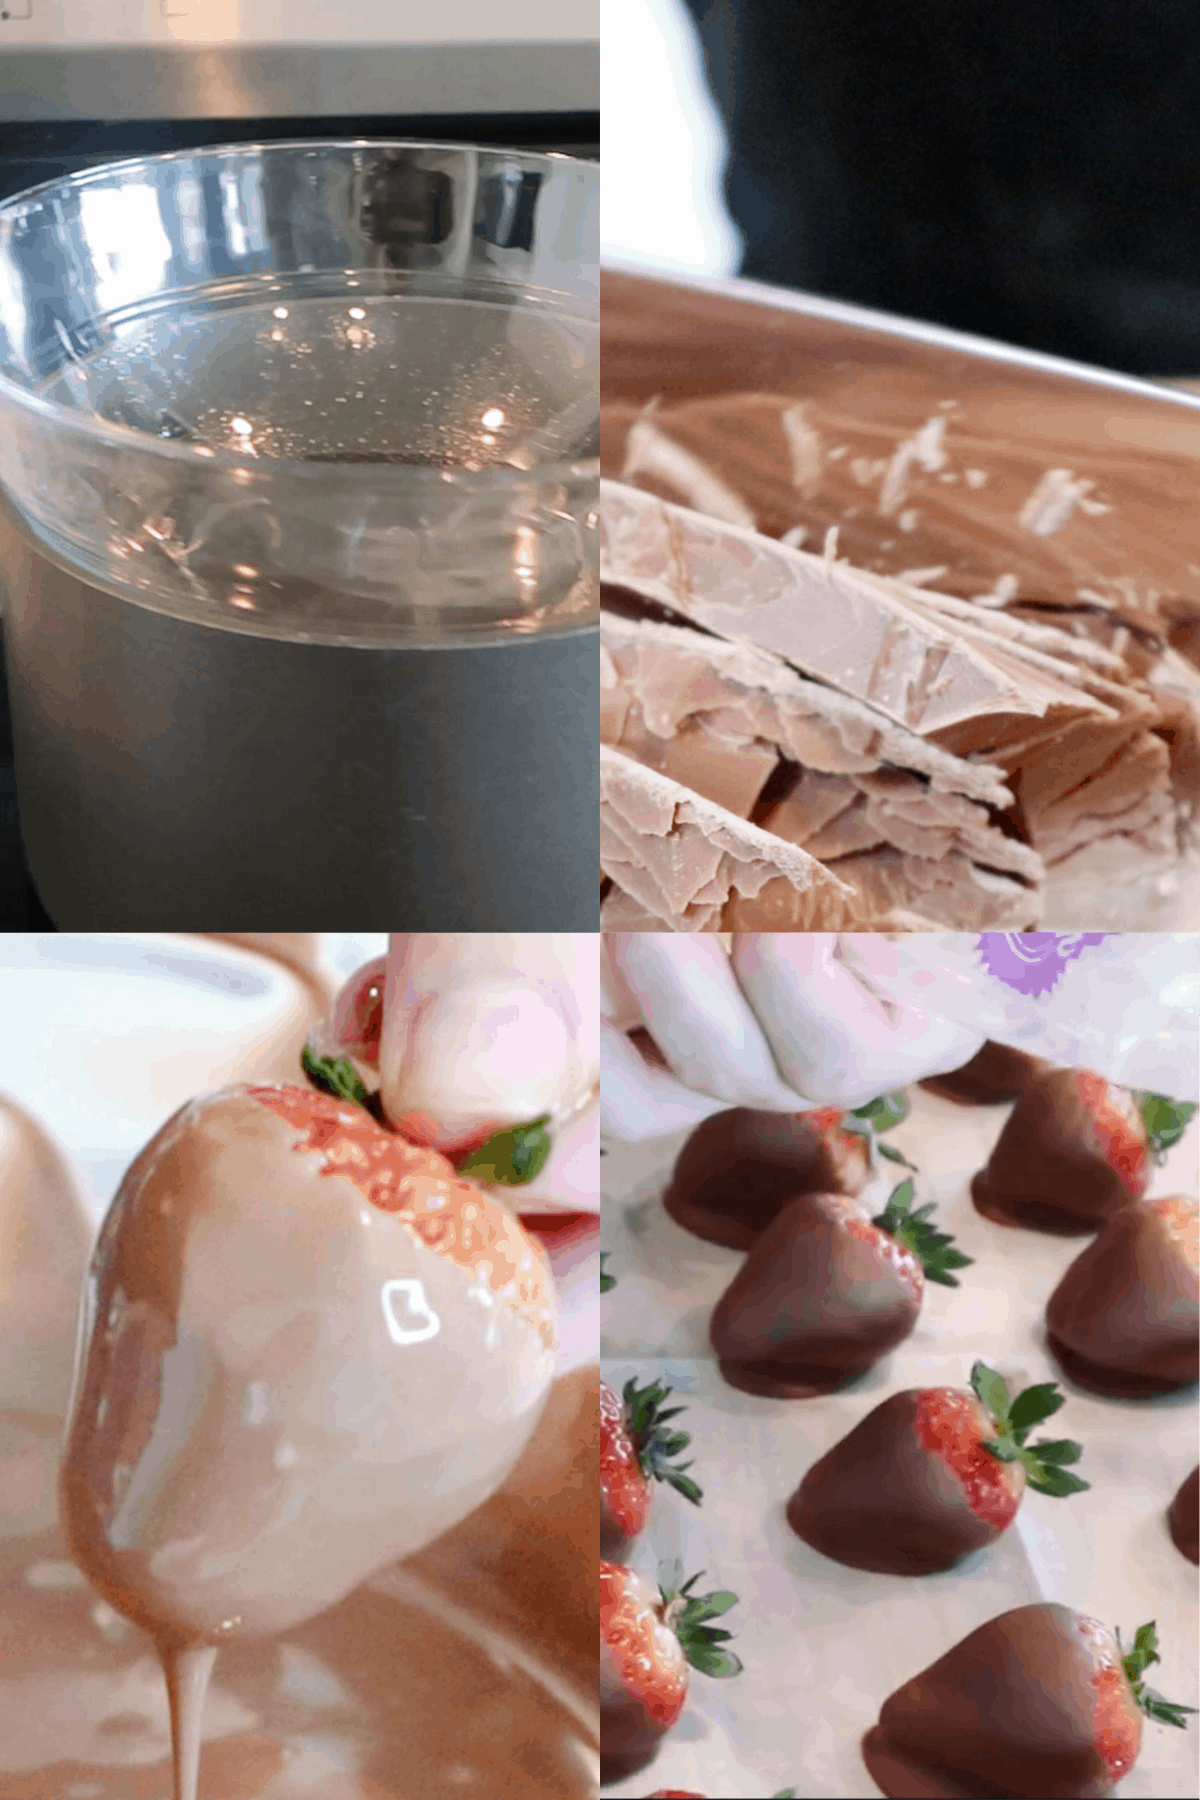 step by step how to make homemade chocolate covered strawberries, fancy chocolate strawberries, best chocolate for dipping strawberries. storing chocolate covered strawberries.